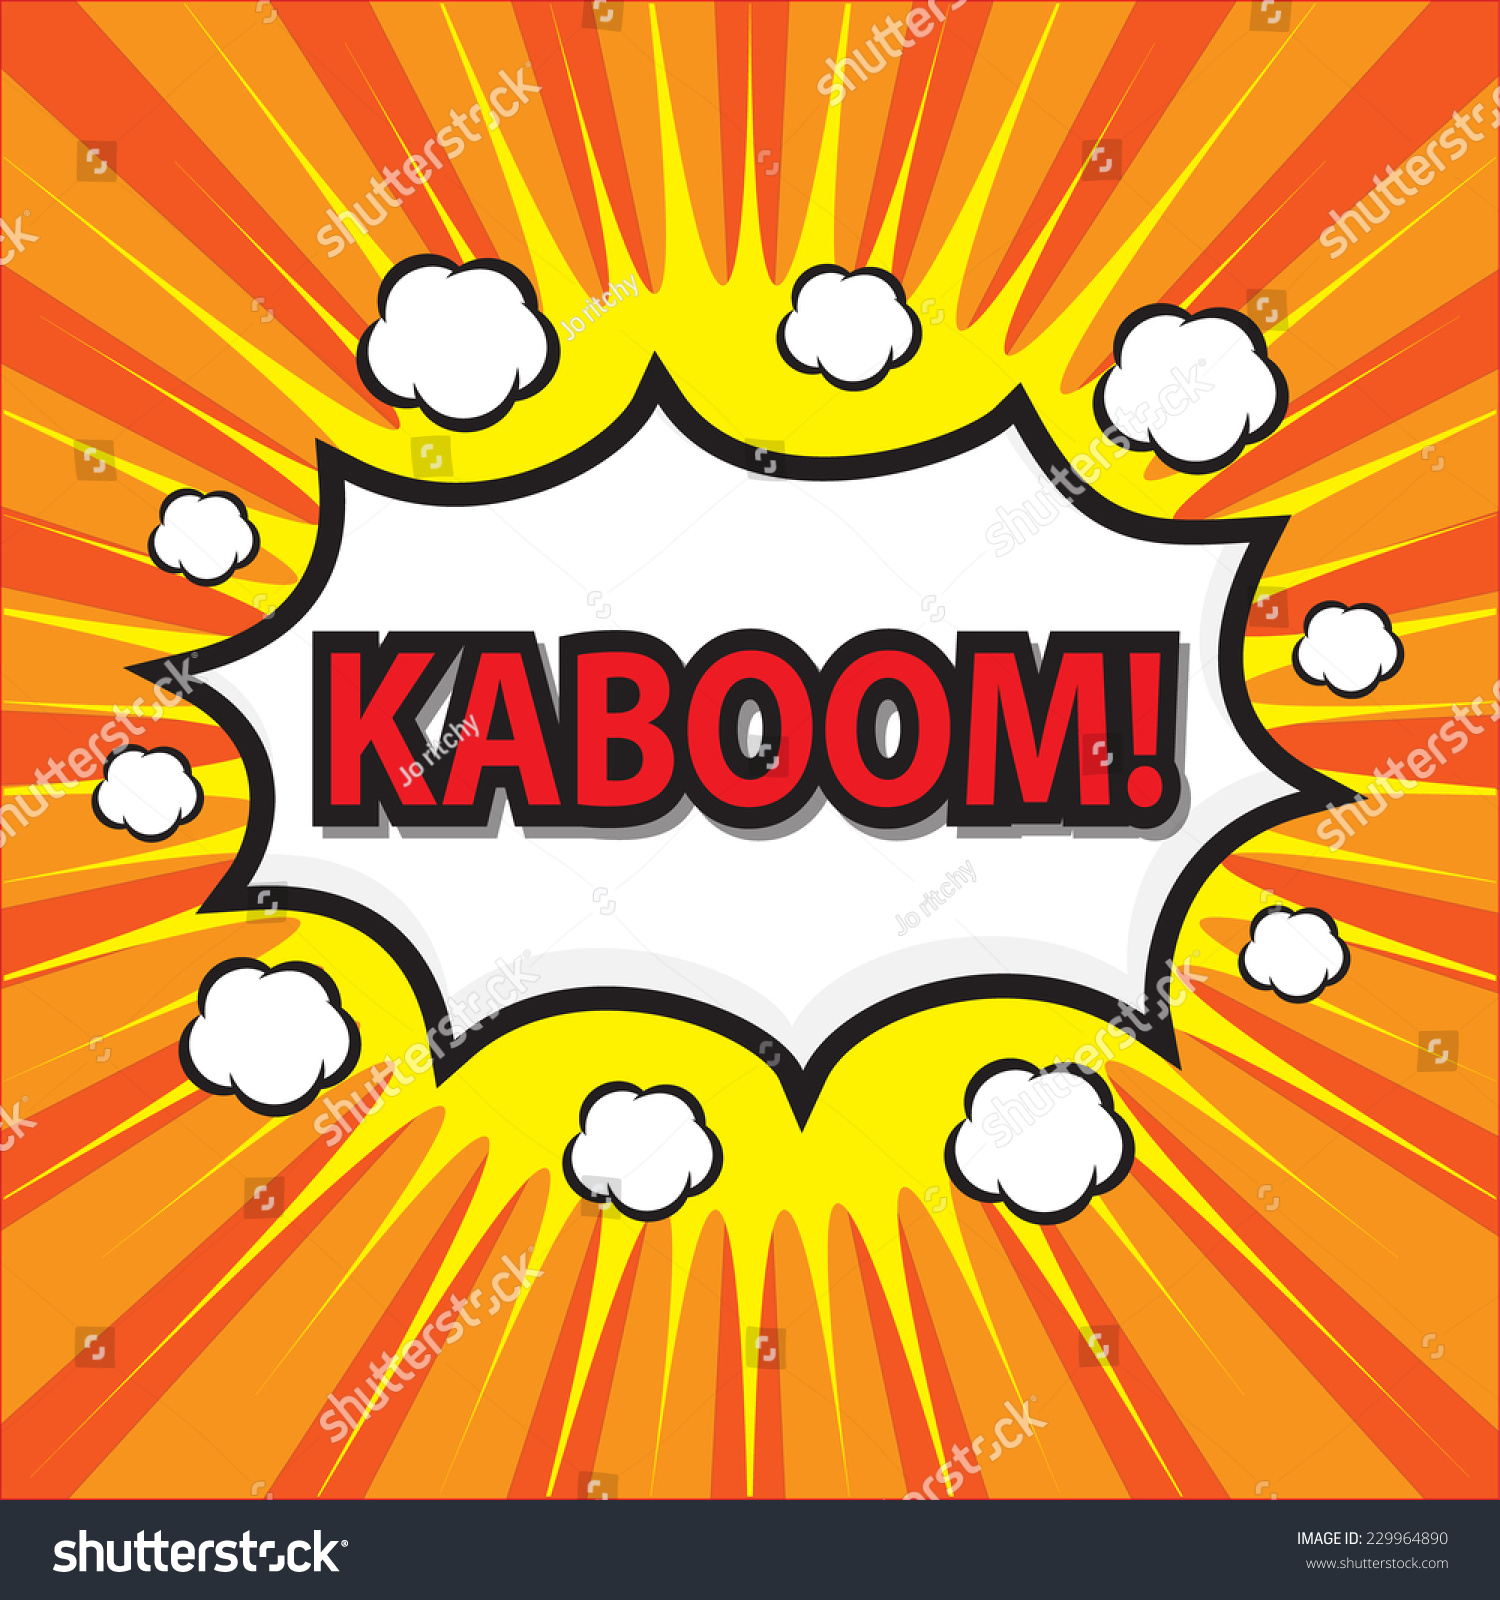 Kaboom Ic Wording Sound Effect Set Stock Image Now